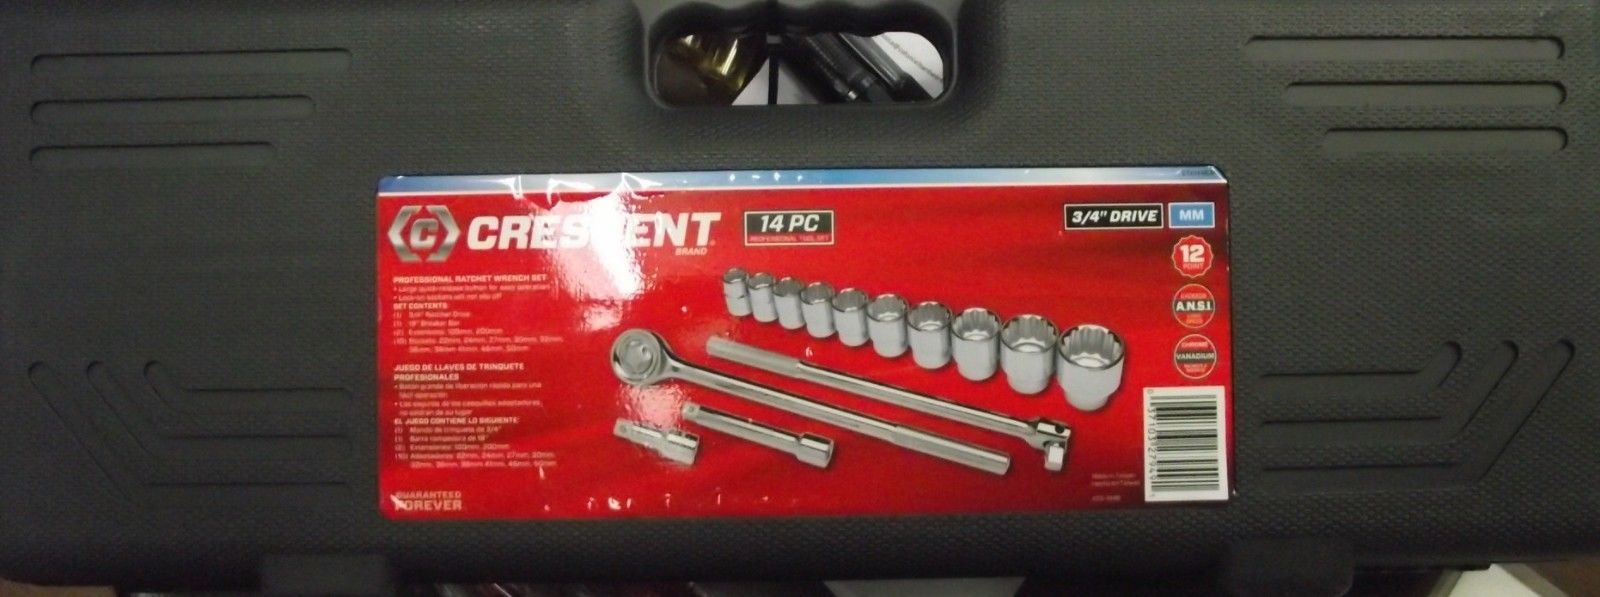 Crescent CTK14MEM 3/4" Drive Metric Mechanics Tool Socket Set - 14 Piece